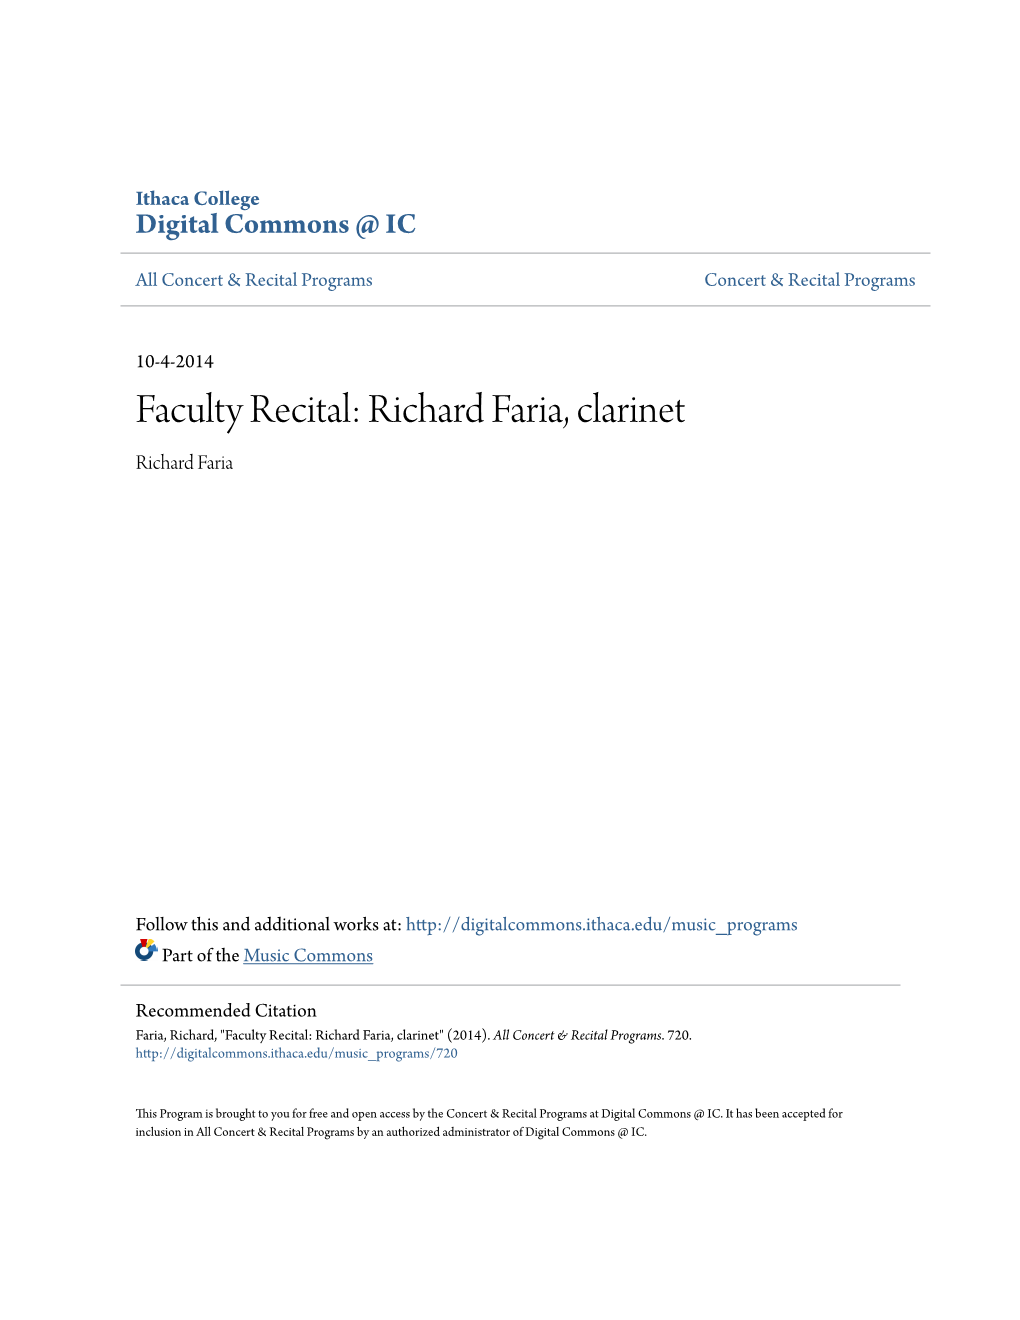 Faculty Recital: Richard Faria, Clarinet Richard Faria